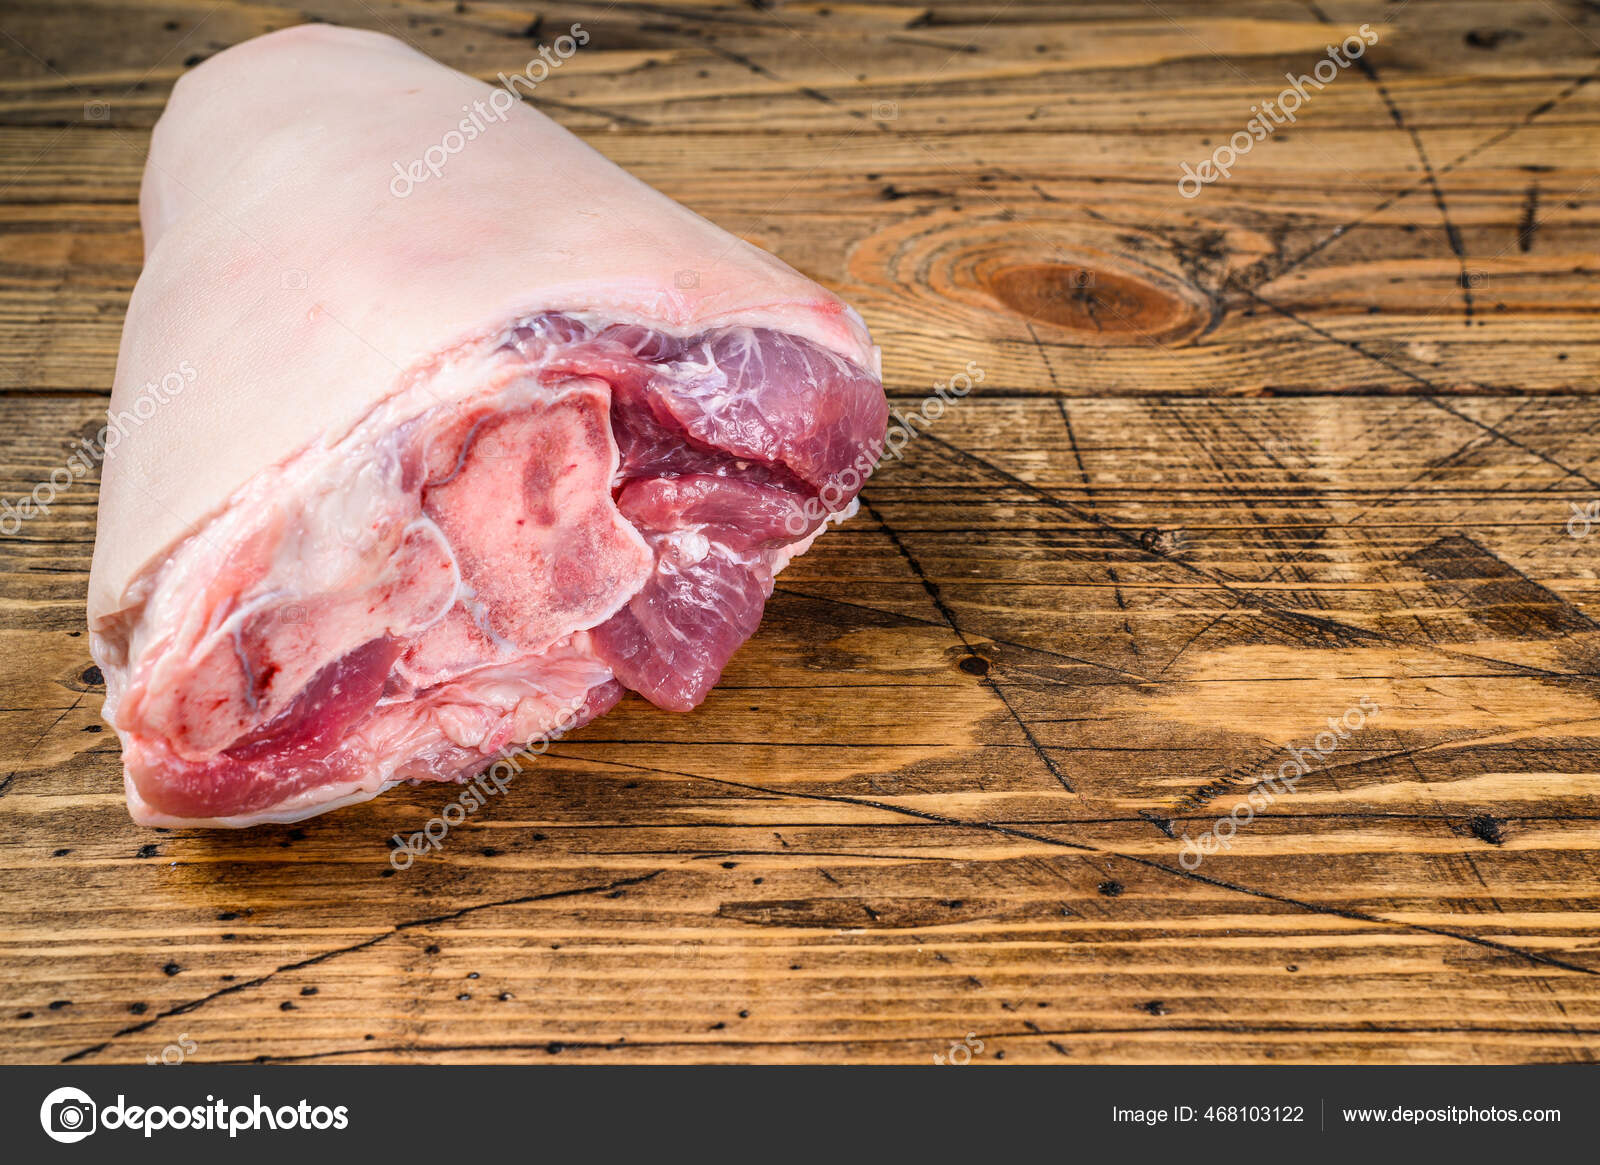 https://st2.depositphotos.com/22628872/46810/i/1600/depositphotos_468103122-stock-photo-raw-pork-knuckle-meat-on.jpg